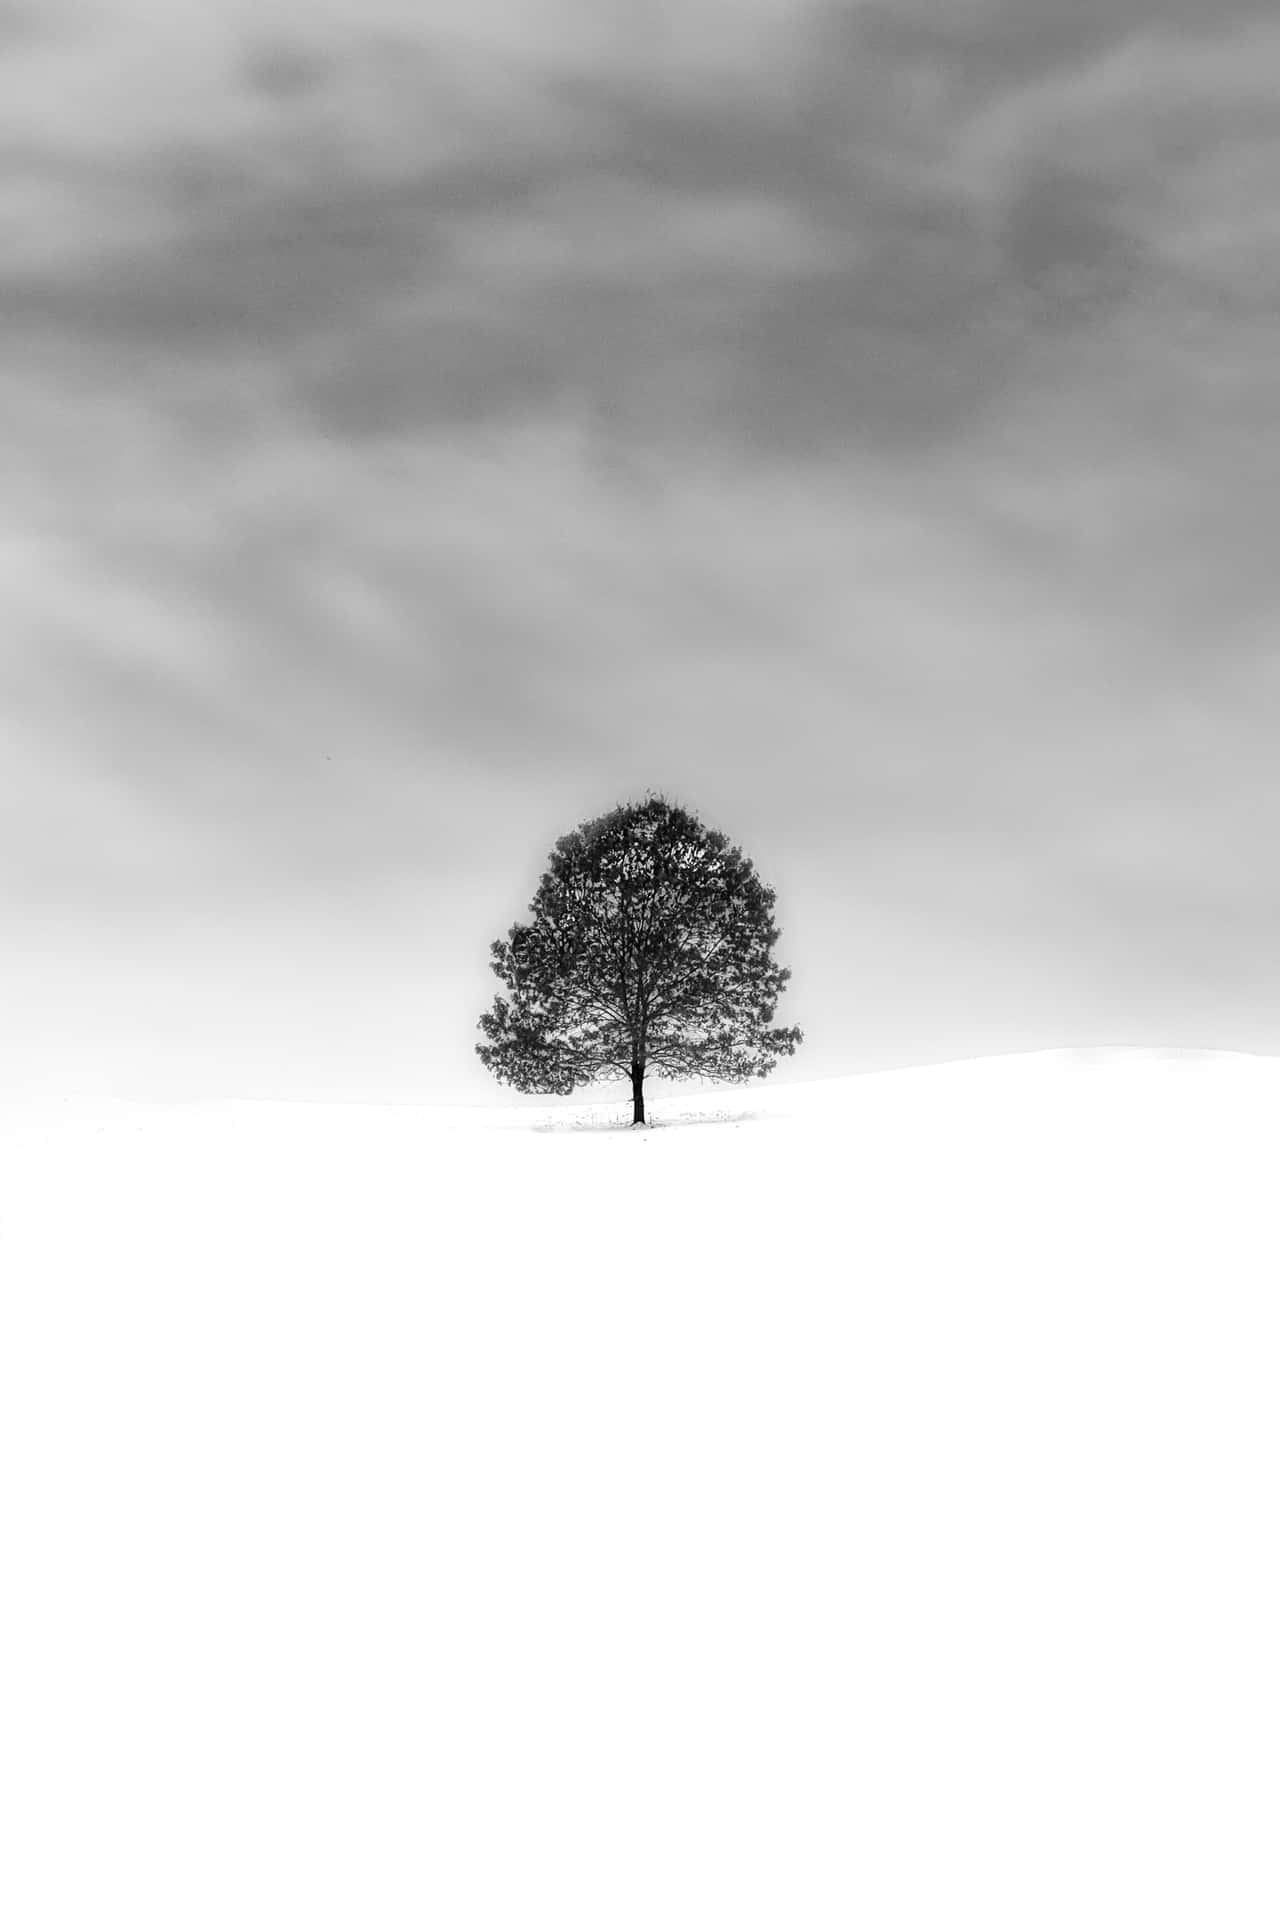 Solitary Tree in Monochrome Landscape Wallpaper